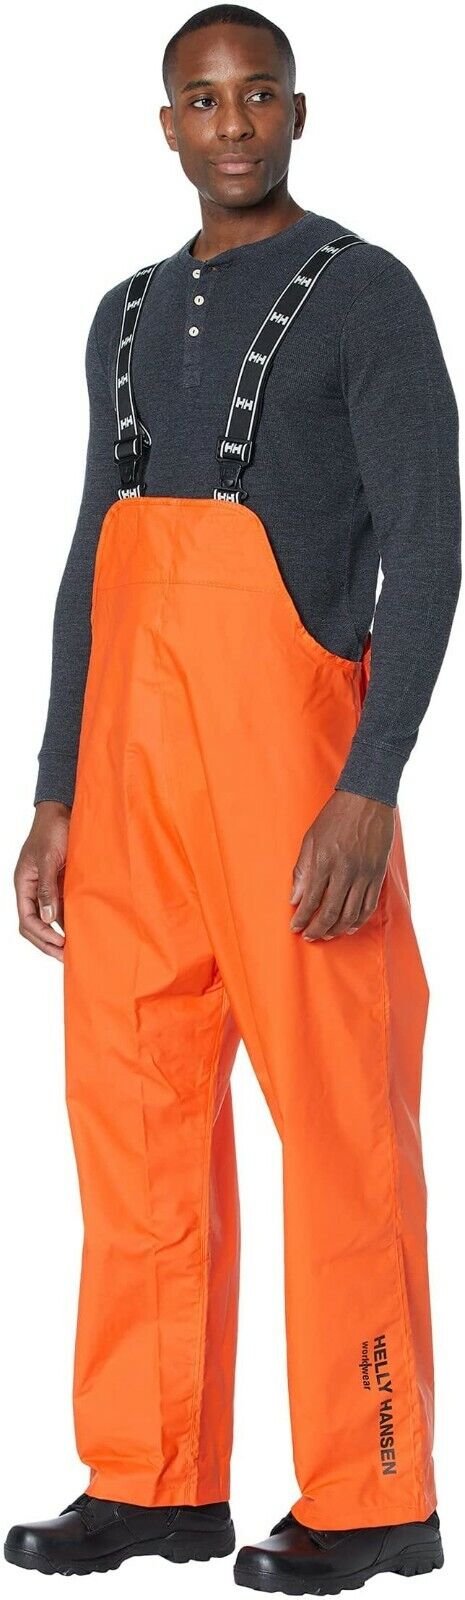 Helly-Hansen Workwear Mandal Waterproof Bib Overalls for Men, Size Large, Orange